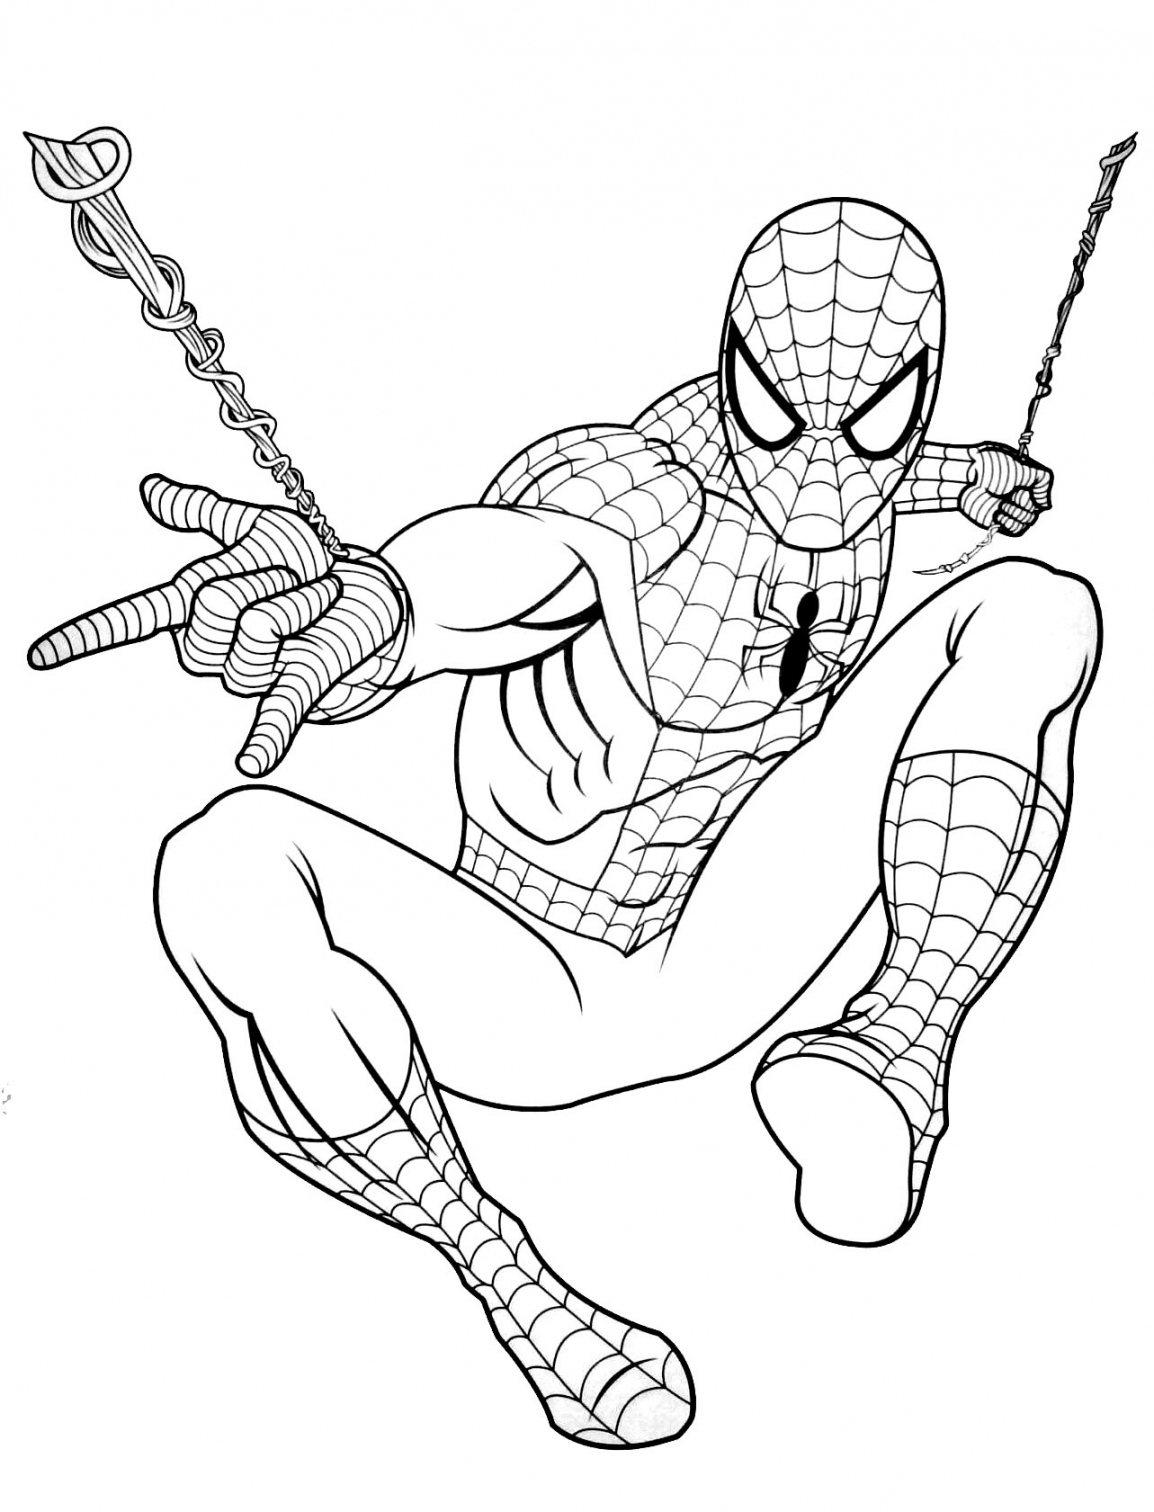 Free Printable Coloring Pages Spiderman - Printable - Free Spiderman drawing to print and color - Spiderman Kids